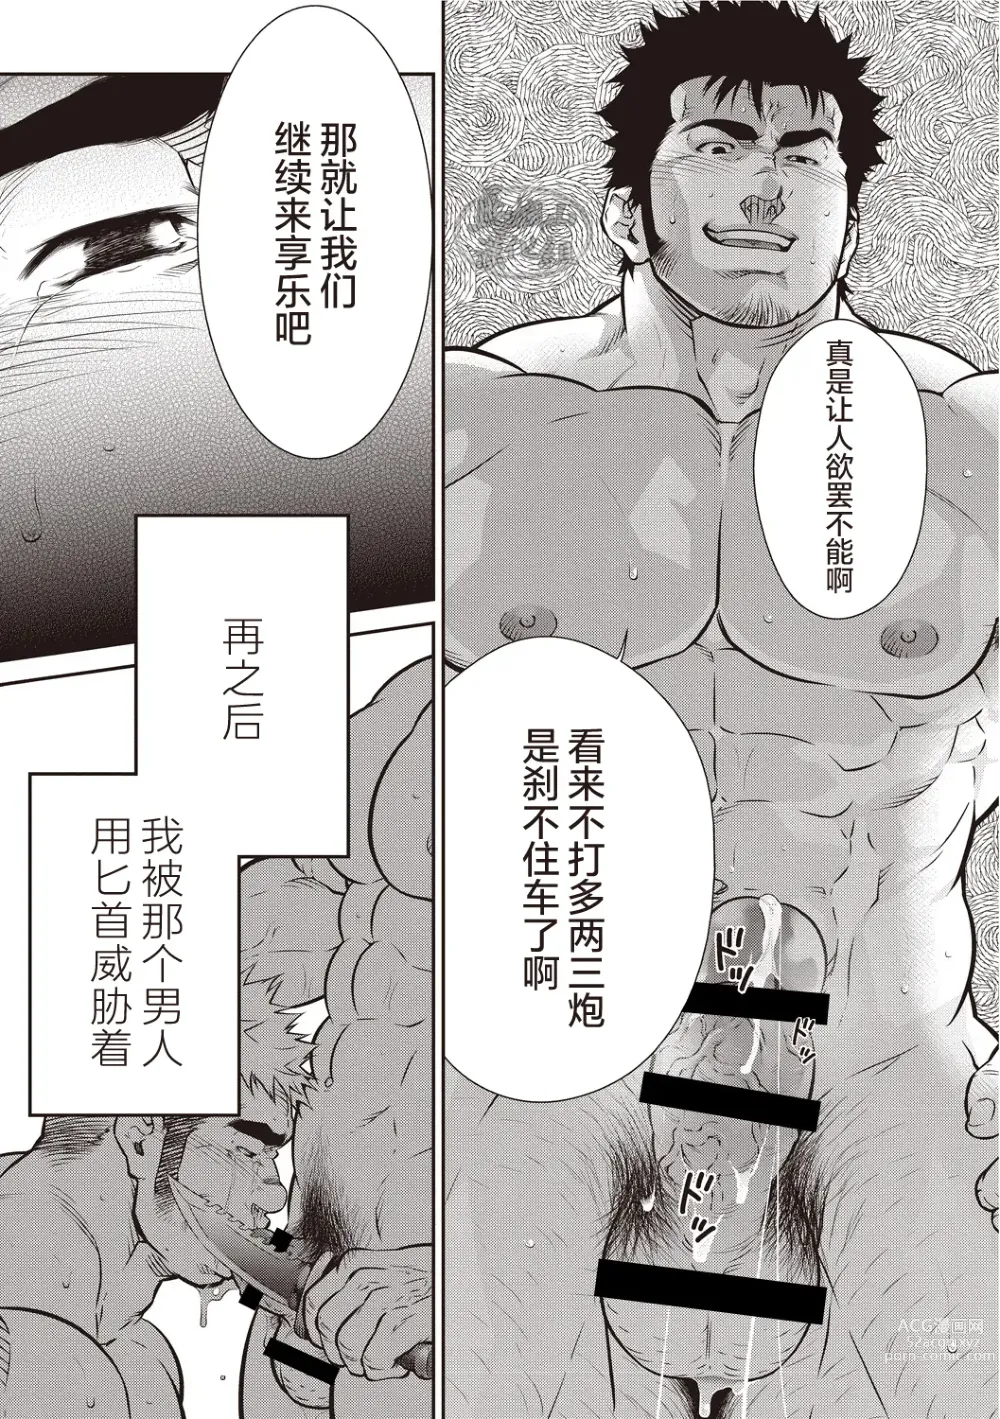 Page 31 of manga  激情男児!! 06 自恋的已婚肌肉男在公园里打飞机的话 / 梦中捆绑